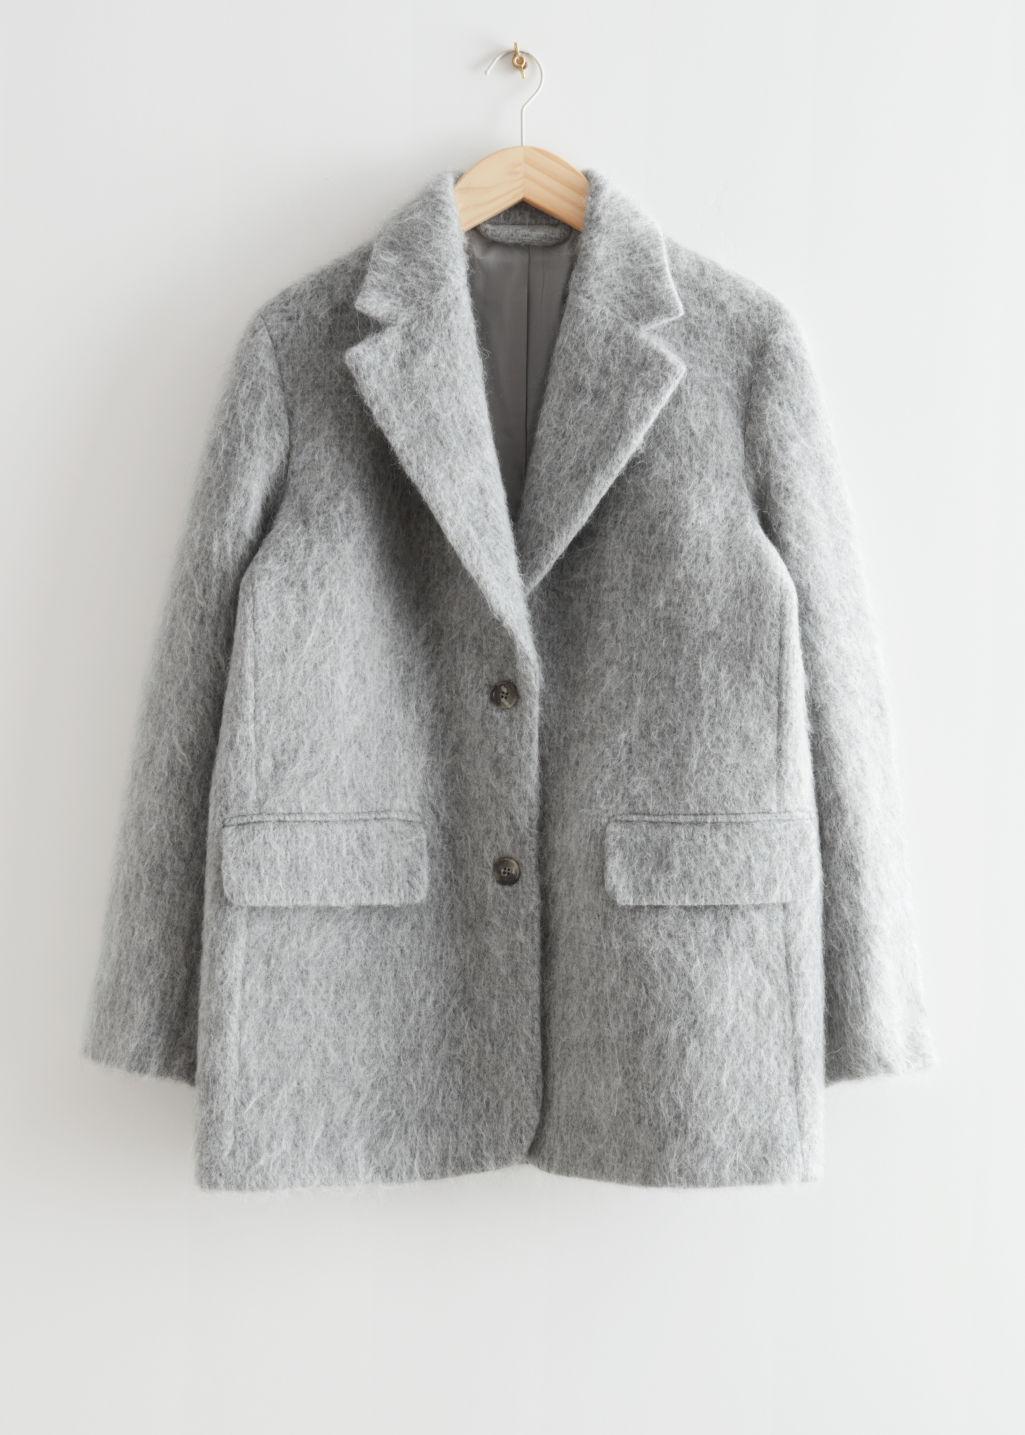 & Other Stories Oversized Fuzzy Wool Blazer in Gray | Lyst